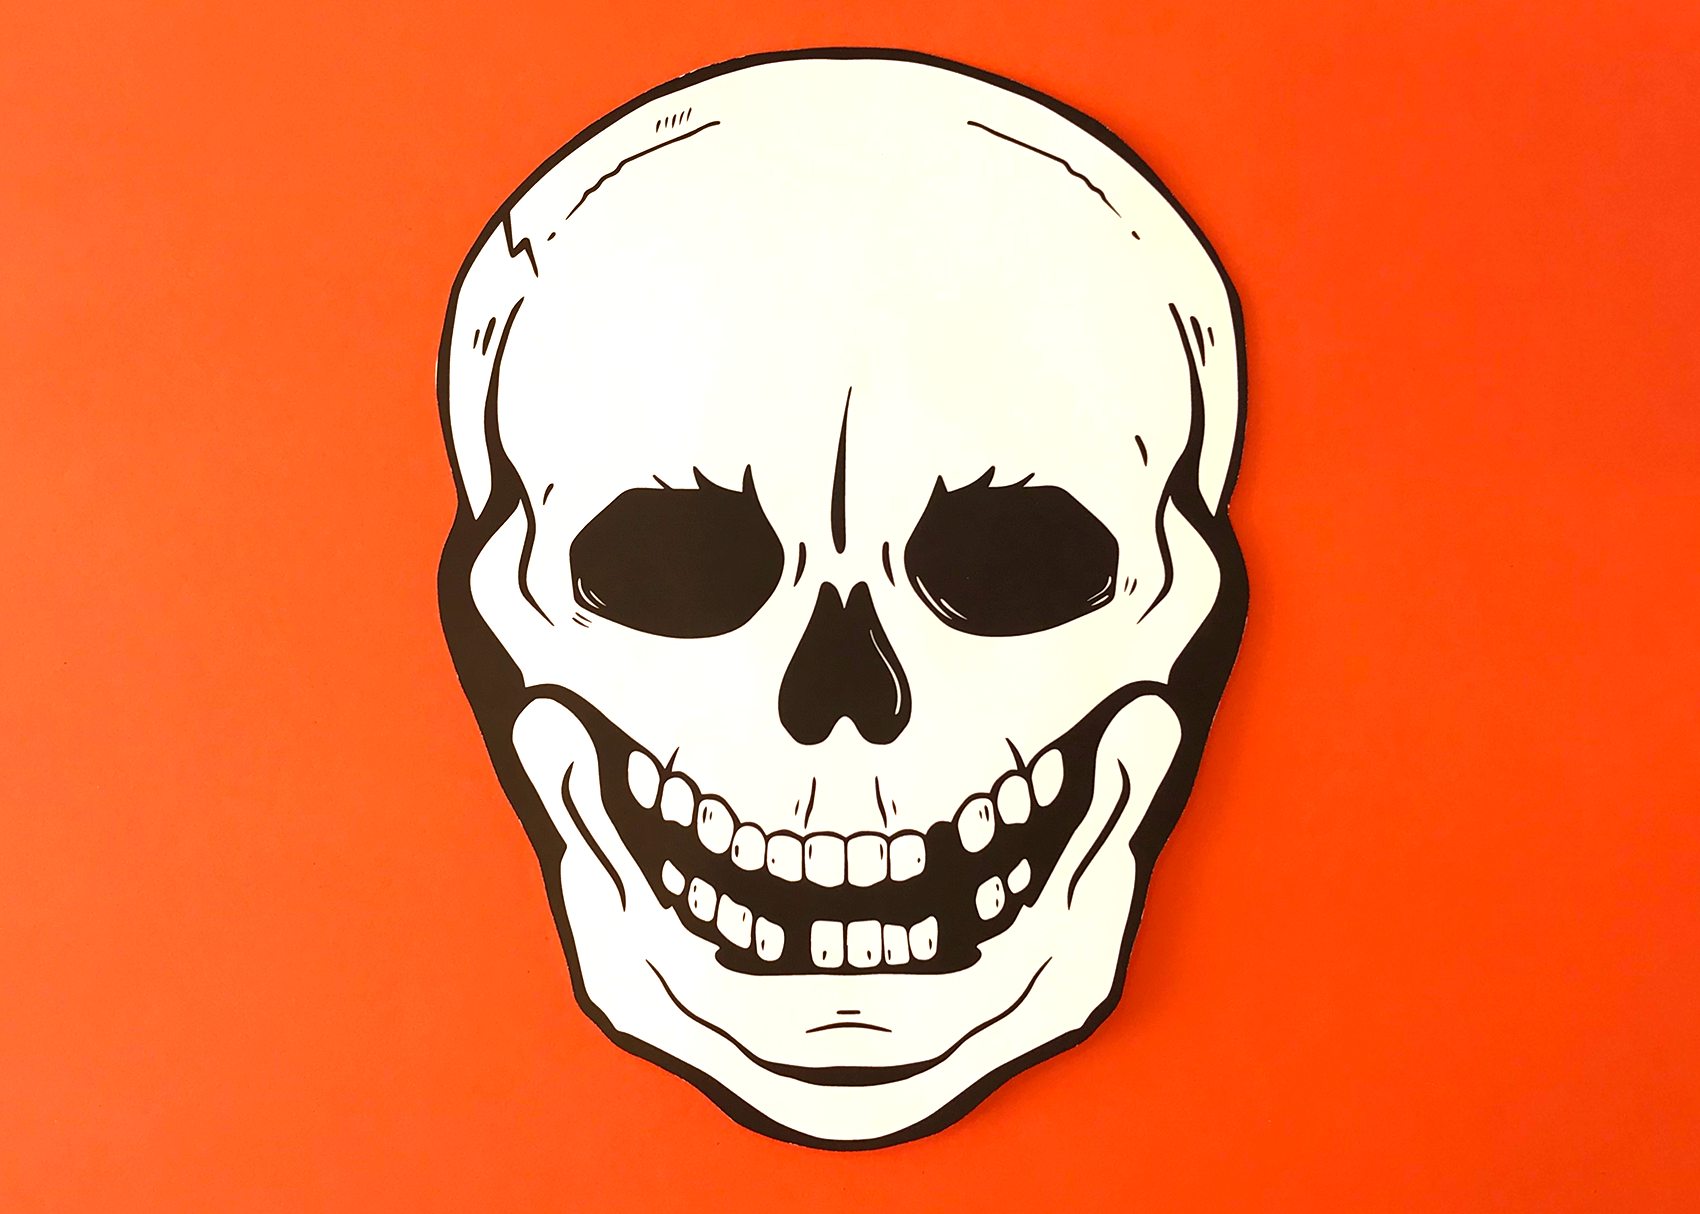 Skull template orange background